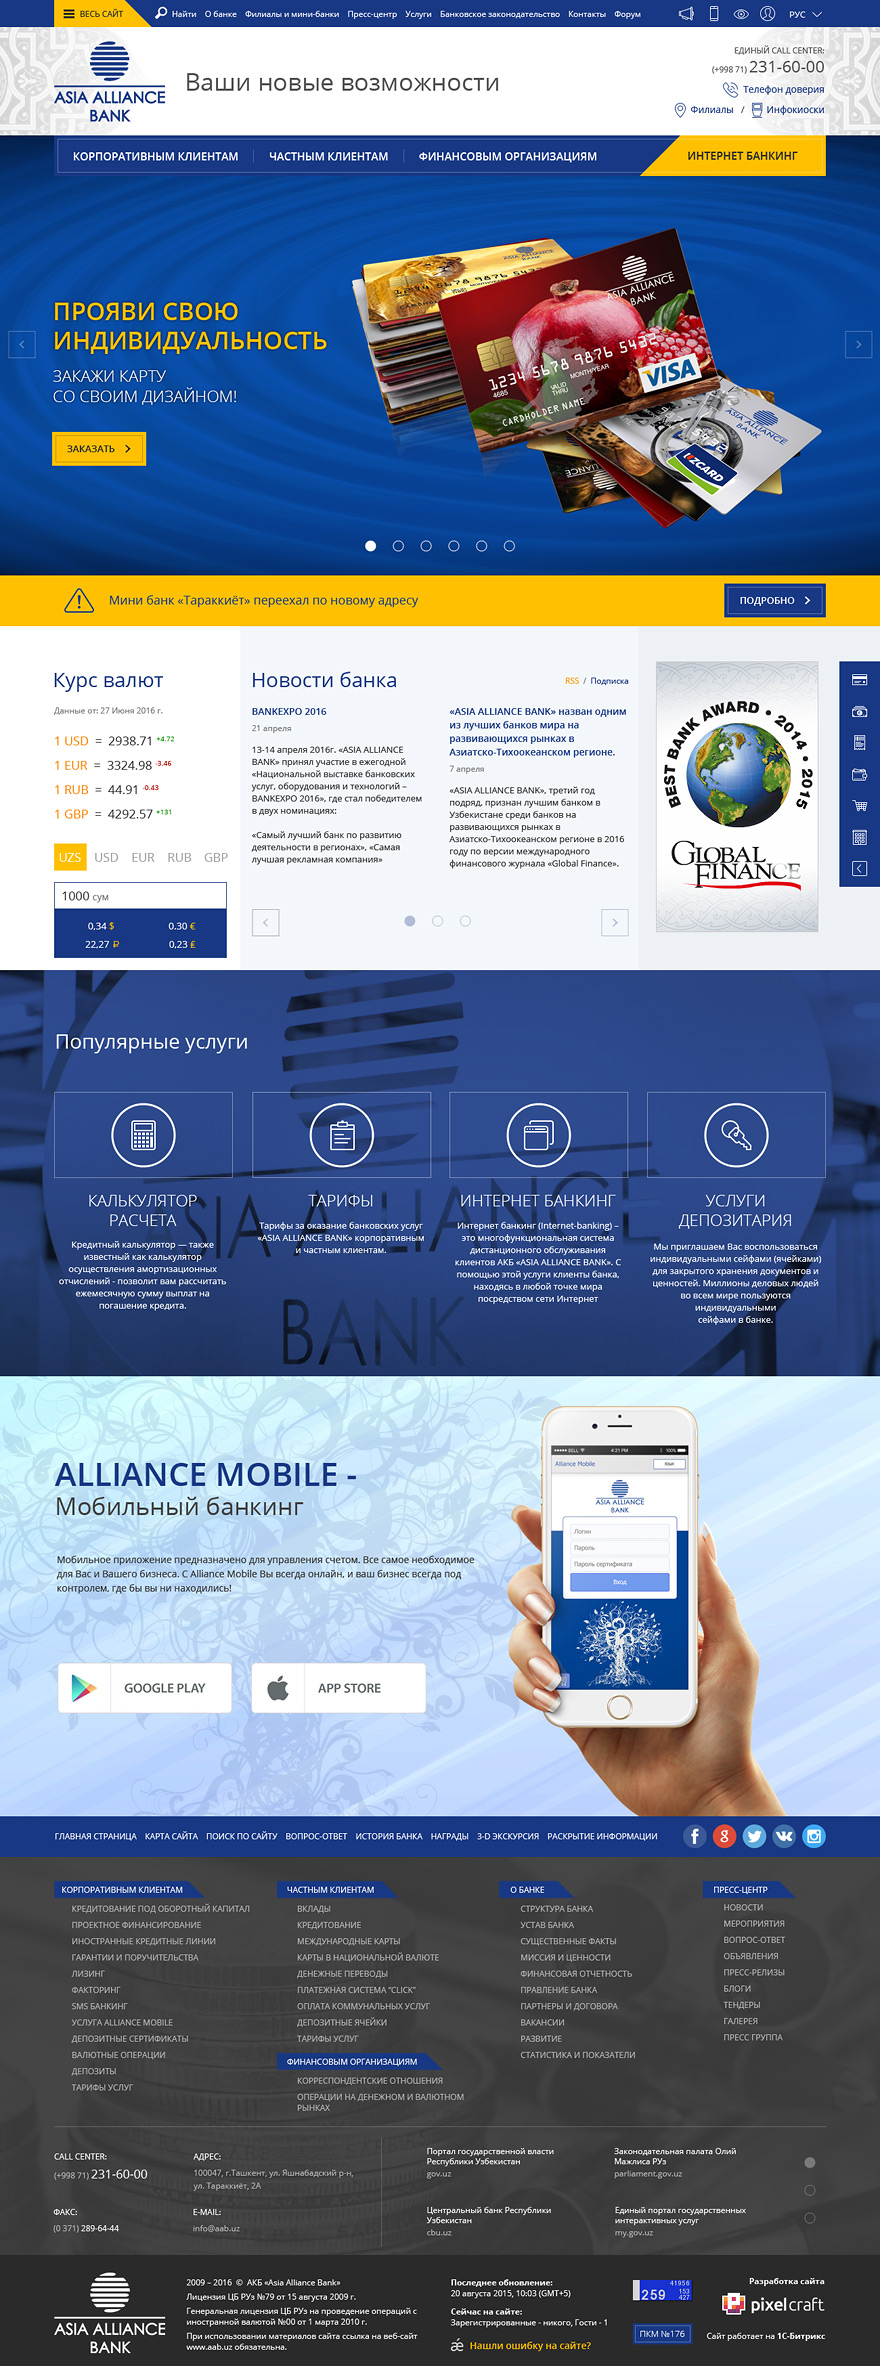 корпоративный сайт акб «asia alliance bank»